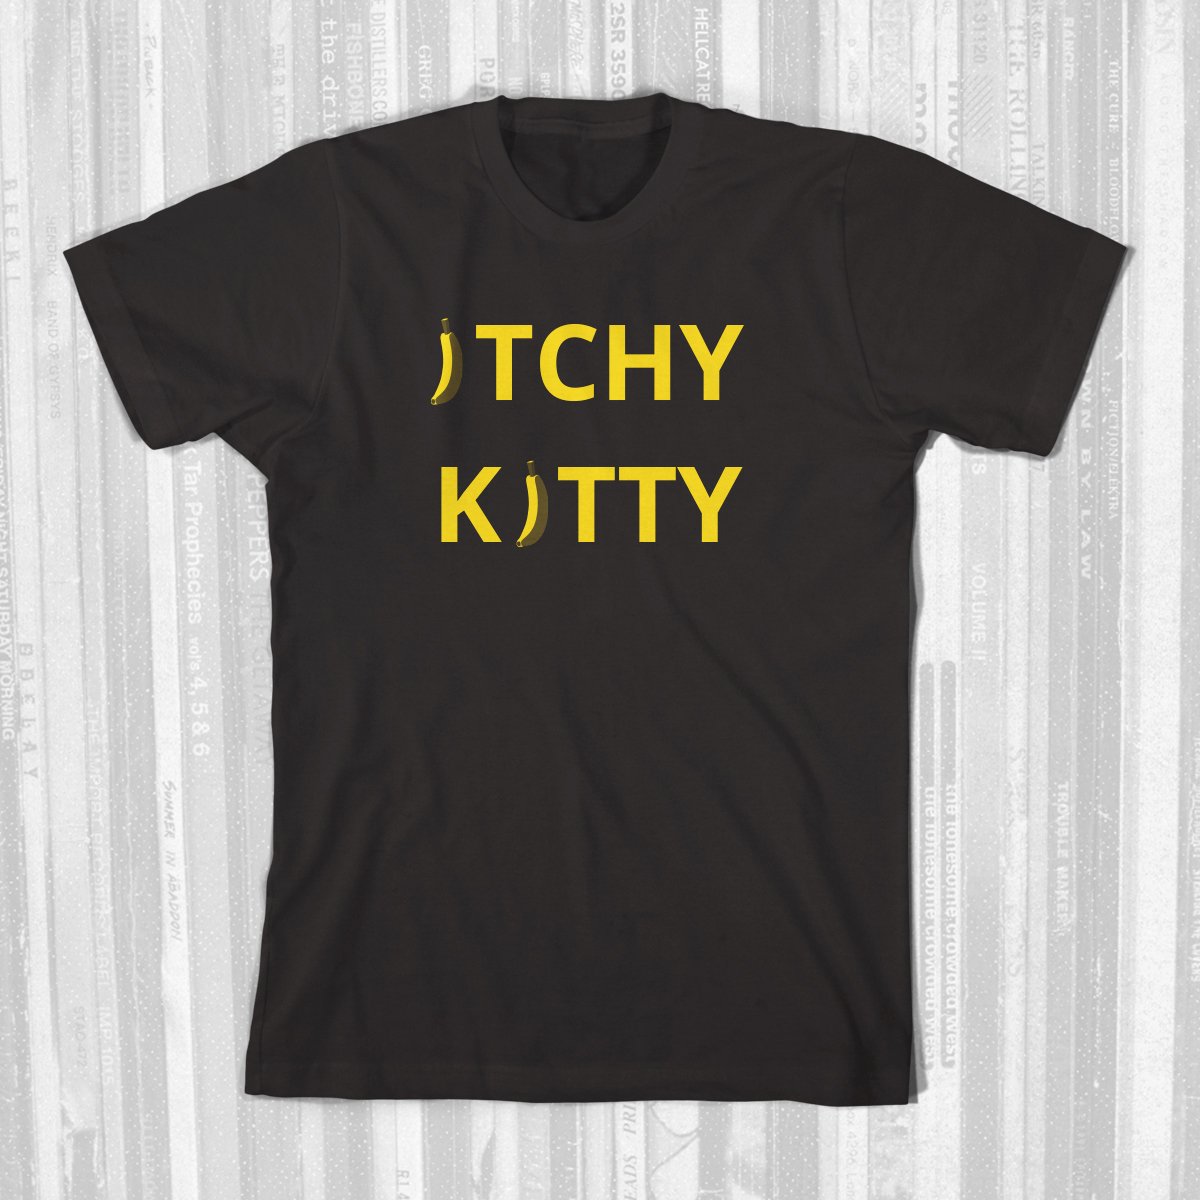 Itchy Kitty - Bananas Tee